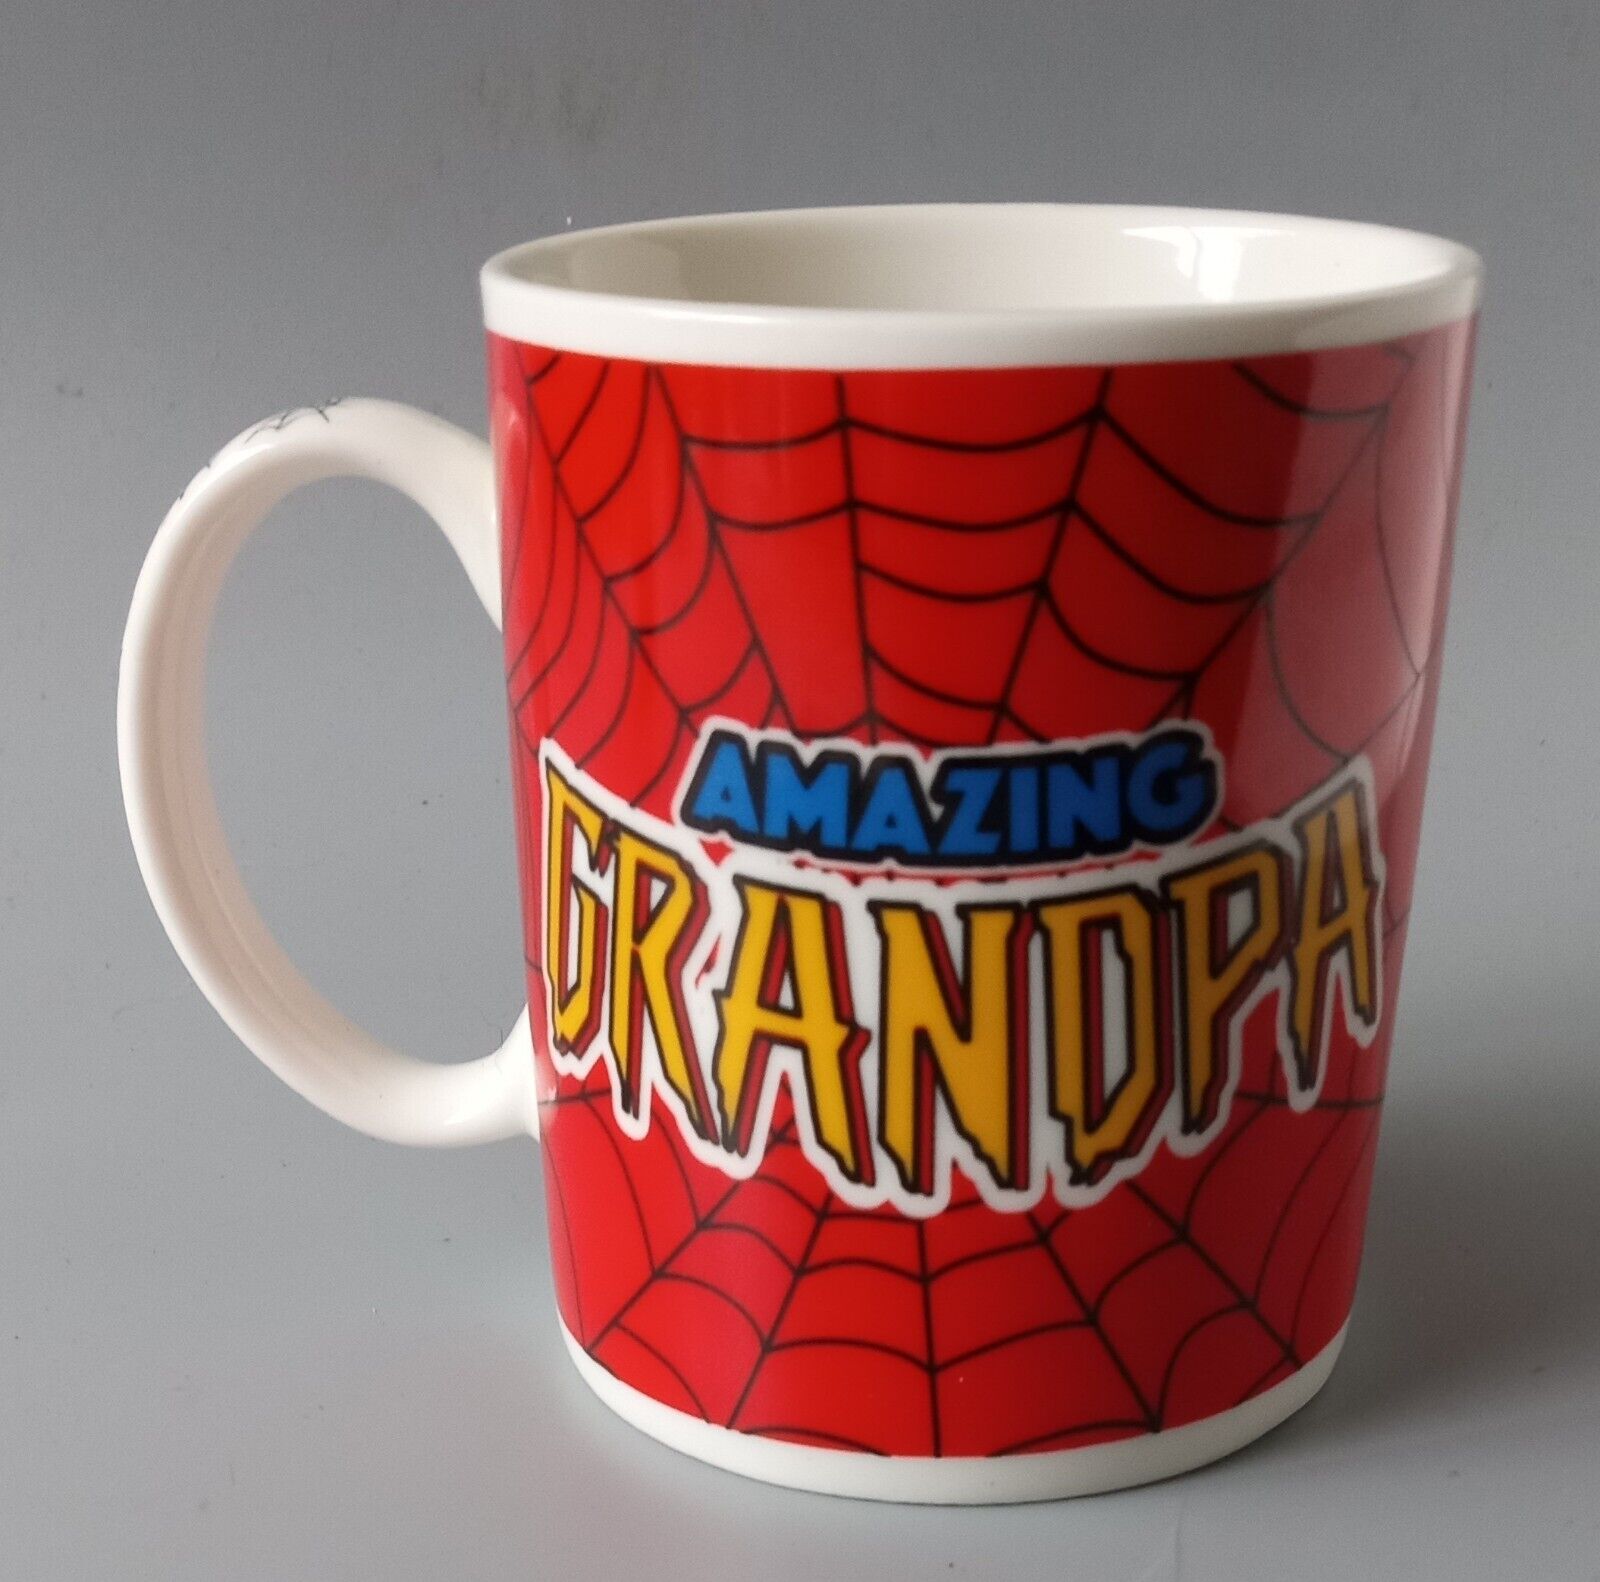 Amazing Grandpa Coffee Mug. 10oz. Spider-Man Look.